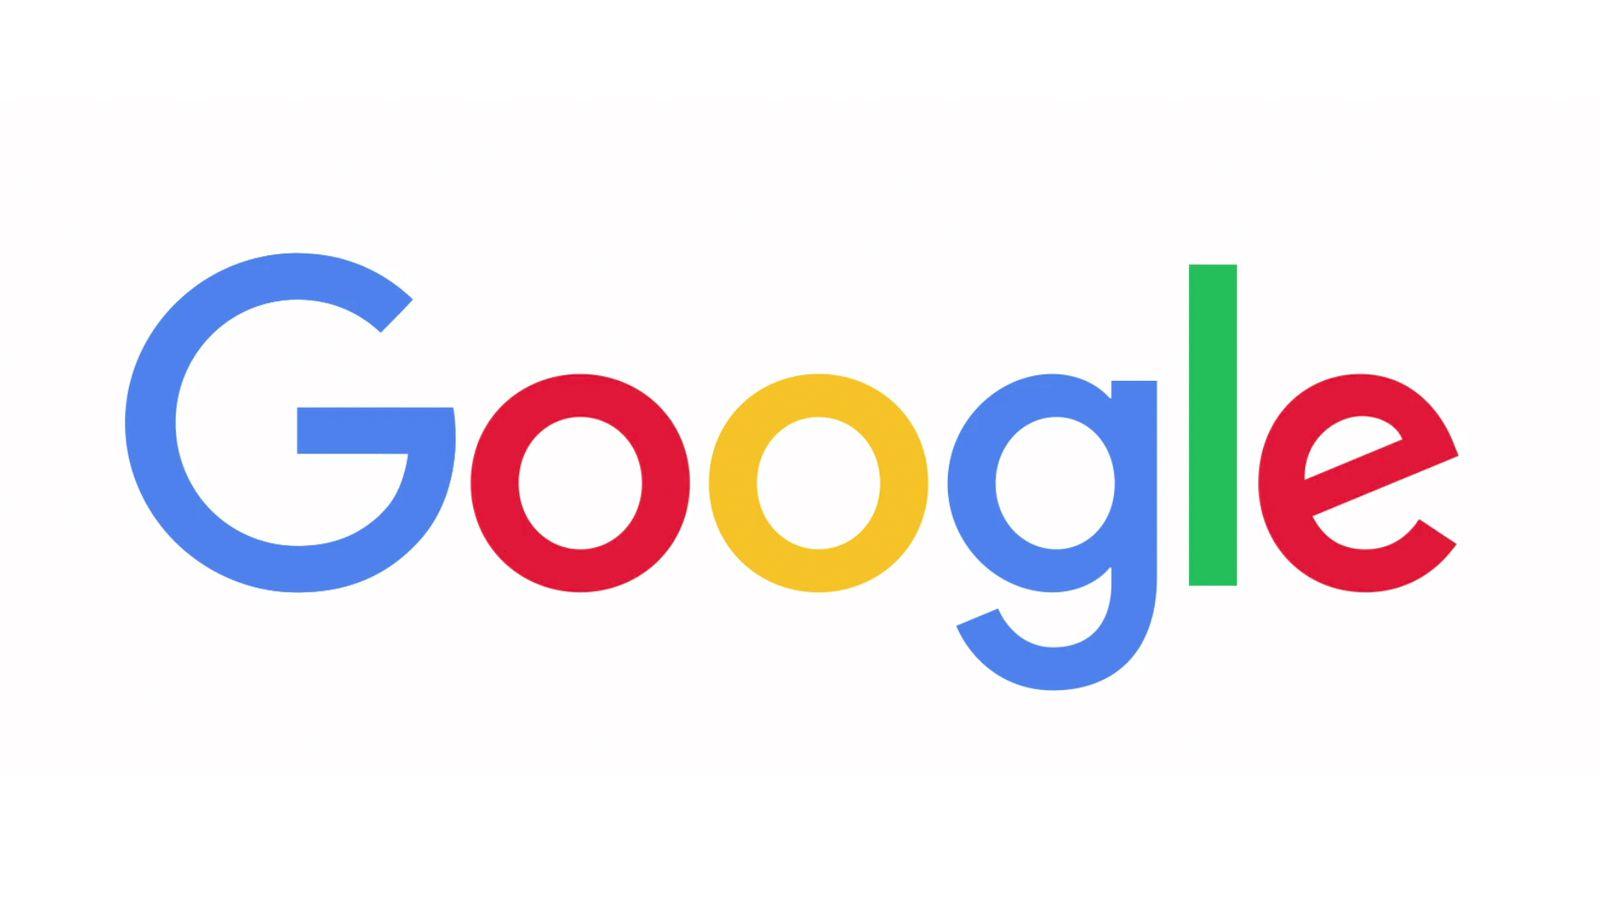 Google Company Logo - Google has a new logo - The Verge